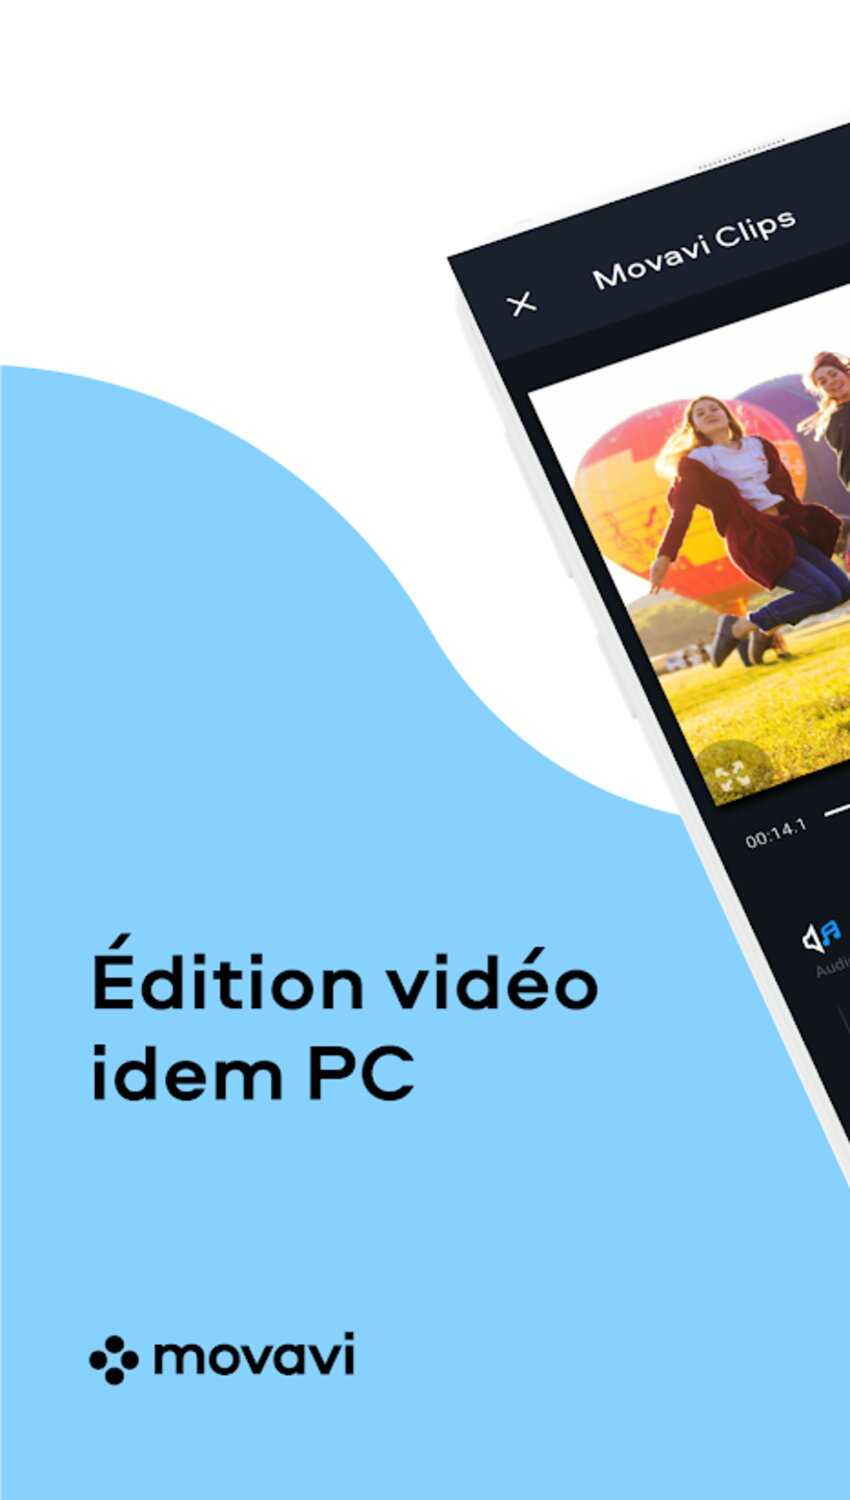 Video Editor Movavi Clips – Video Editor with Slideshows v4.15.1 (Premium) (Mod) APK